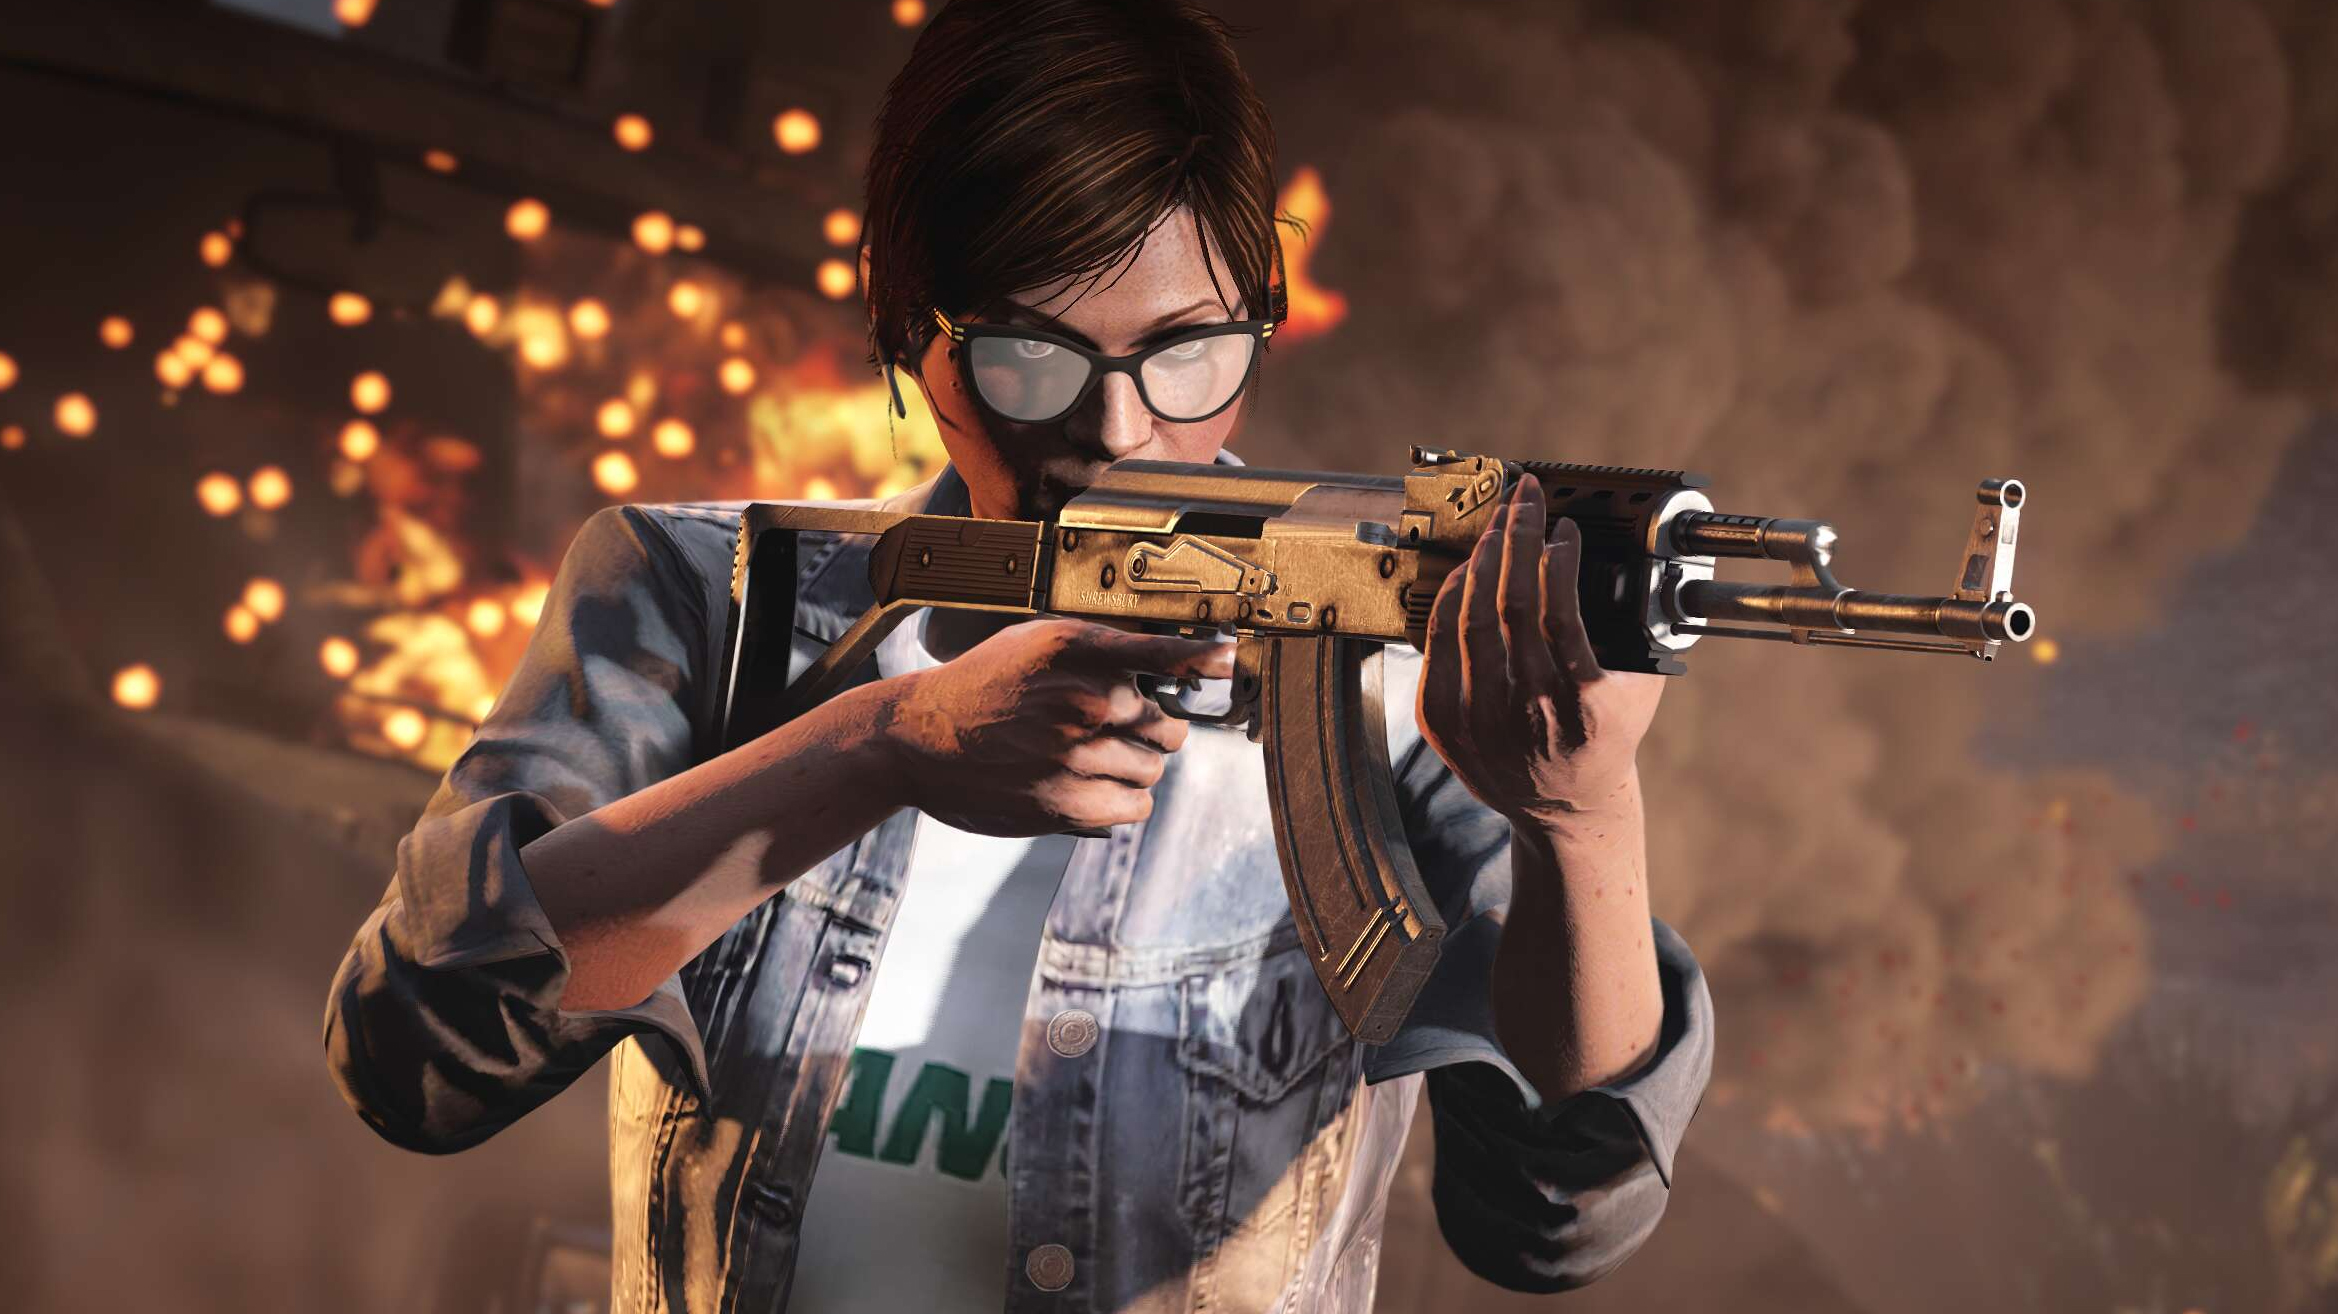 Rockstar Games' Social Club Gets Updated